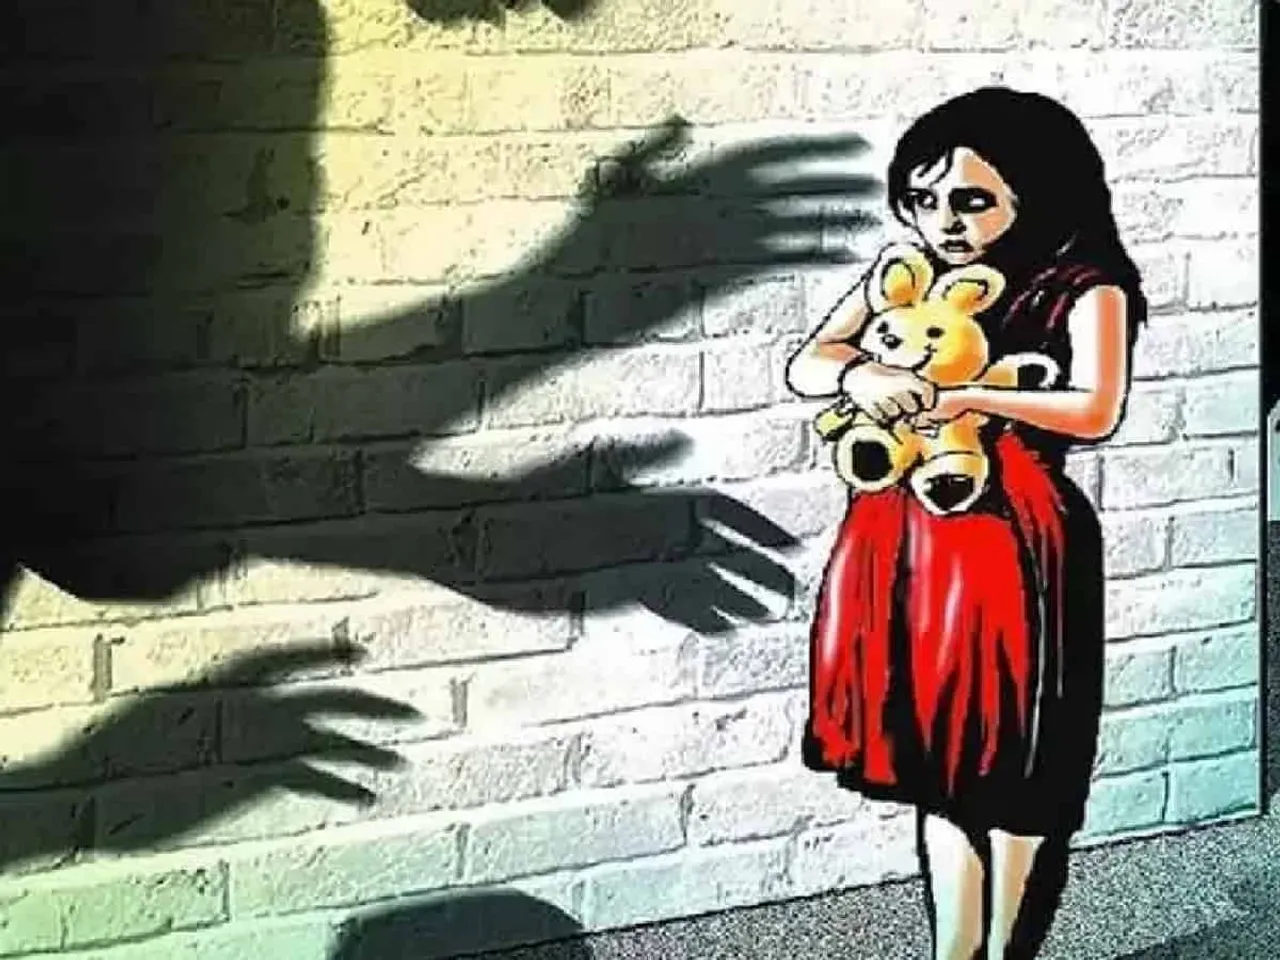 Semen ejaculation not necessary to prove in rape cases: Andhra Pradesh HC